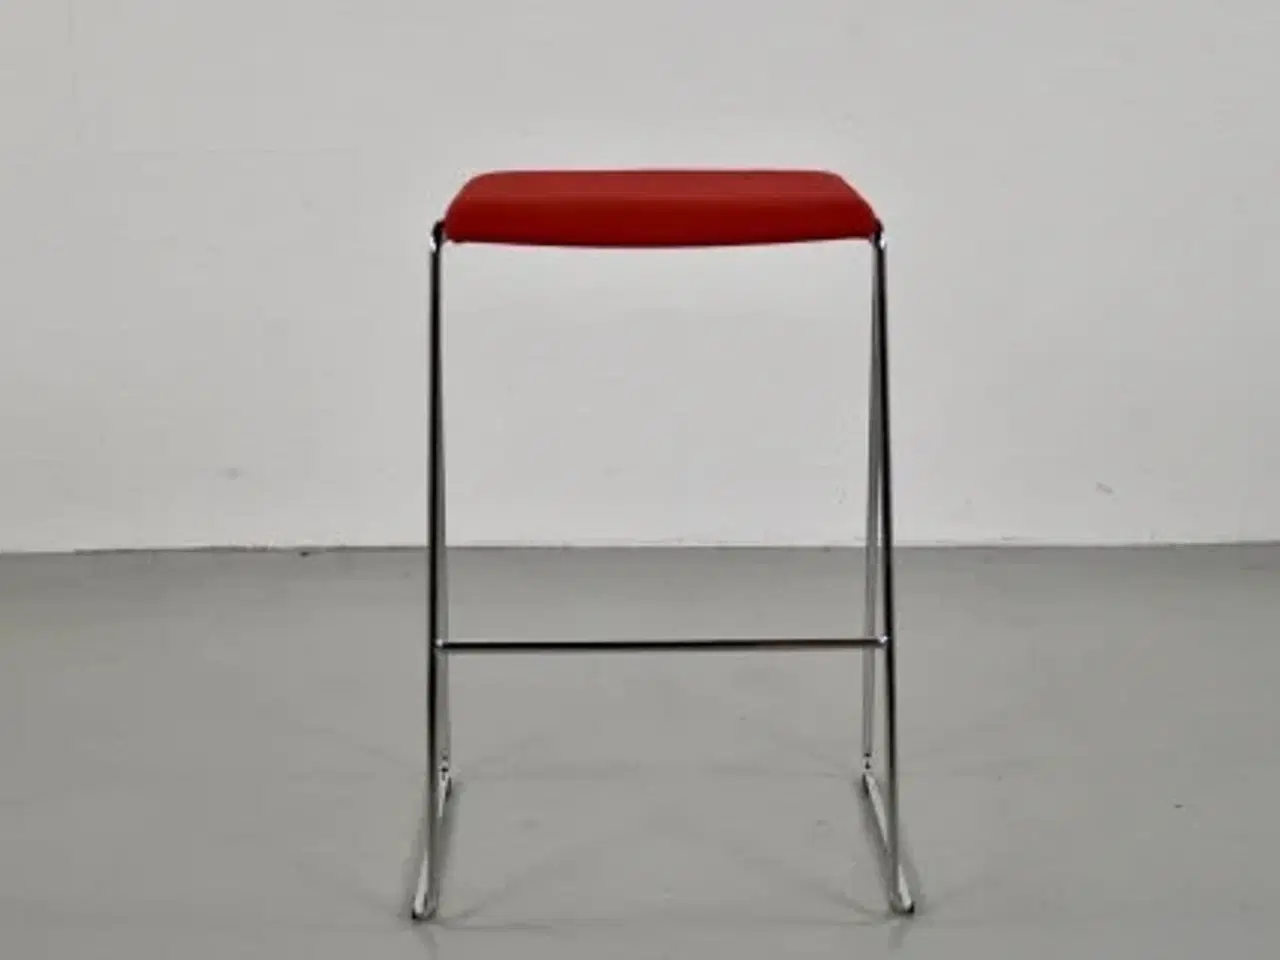 Billede 1 - Savir gate barstol med rødt polster på sædet og på krom stel